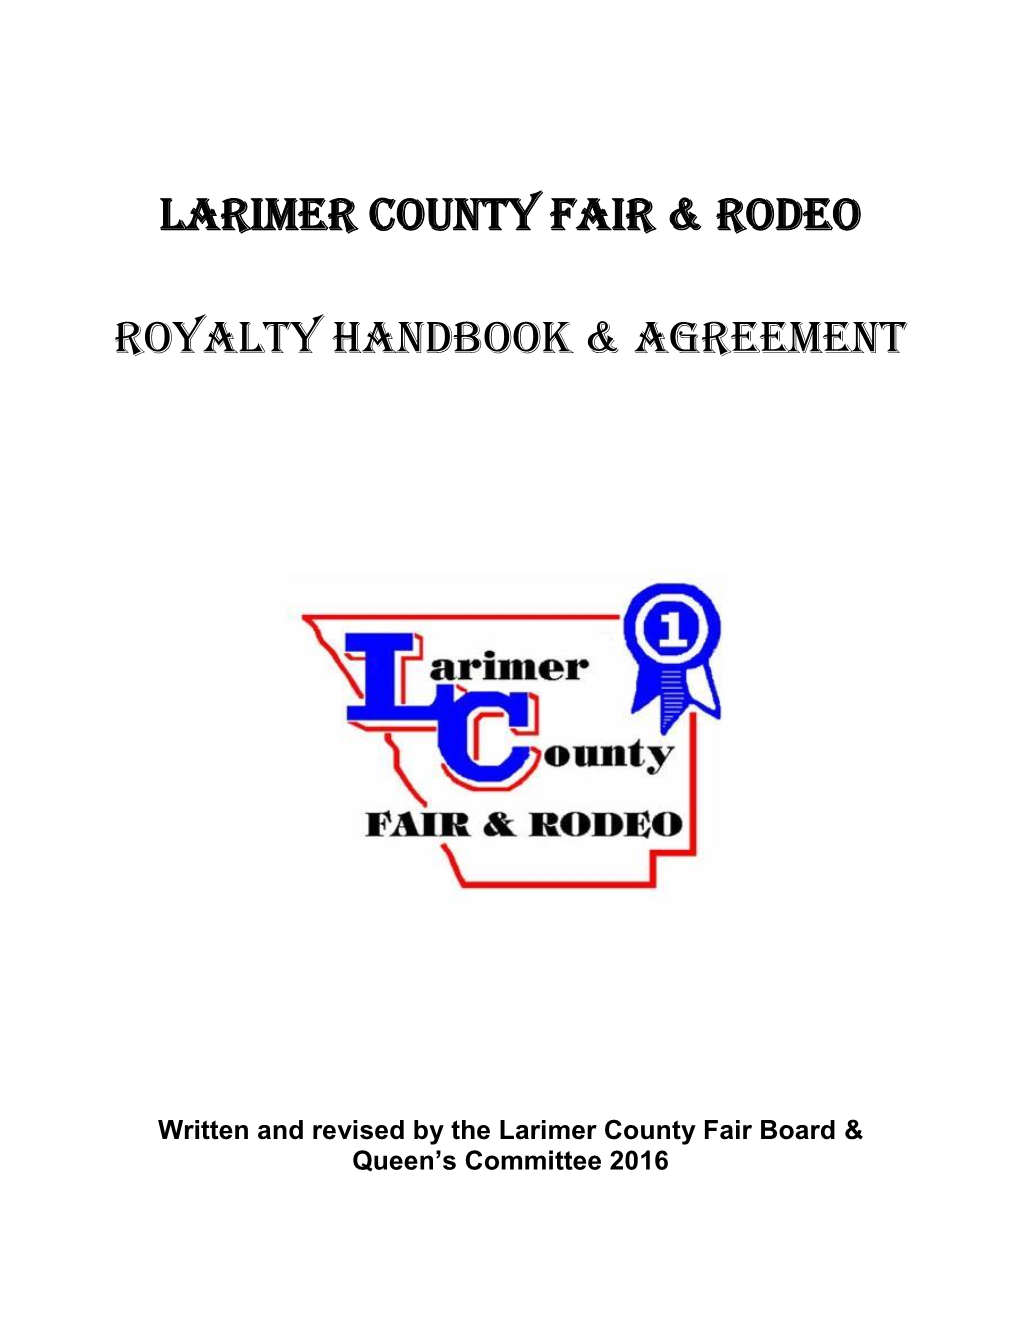 LARIMER COUNTY FAIR & RODEO ROYALTY HANDBOOK & Agreement